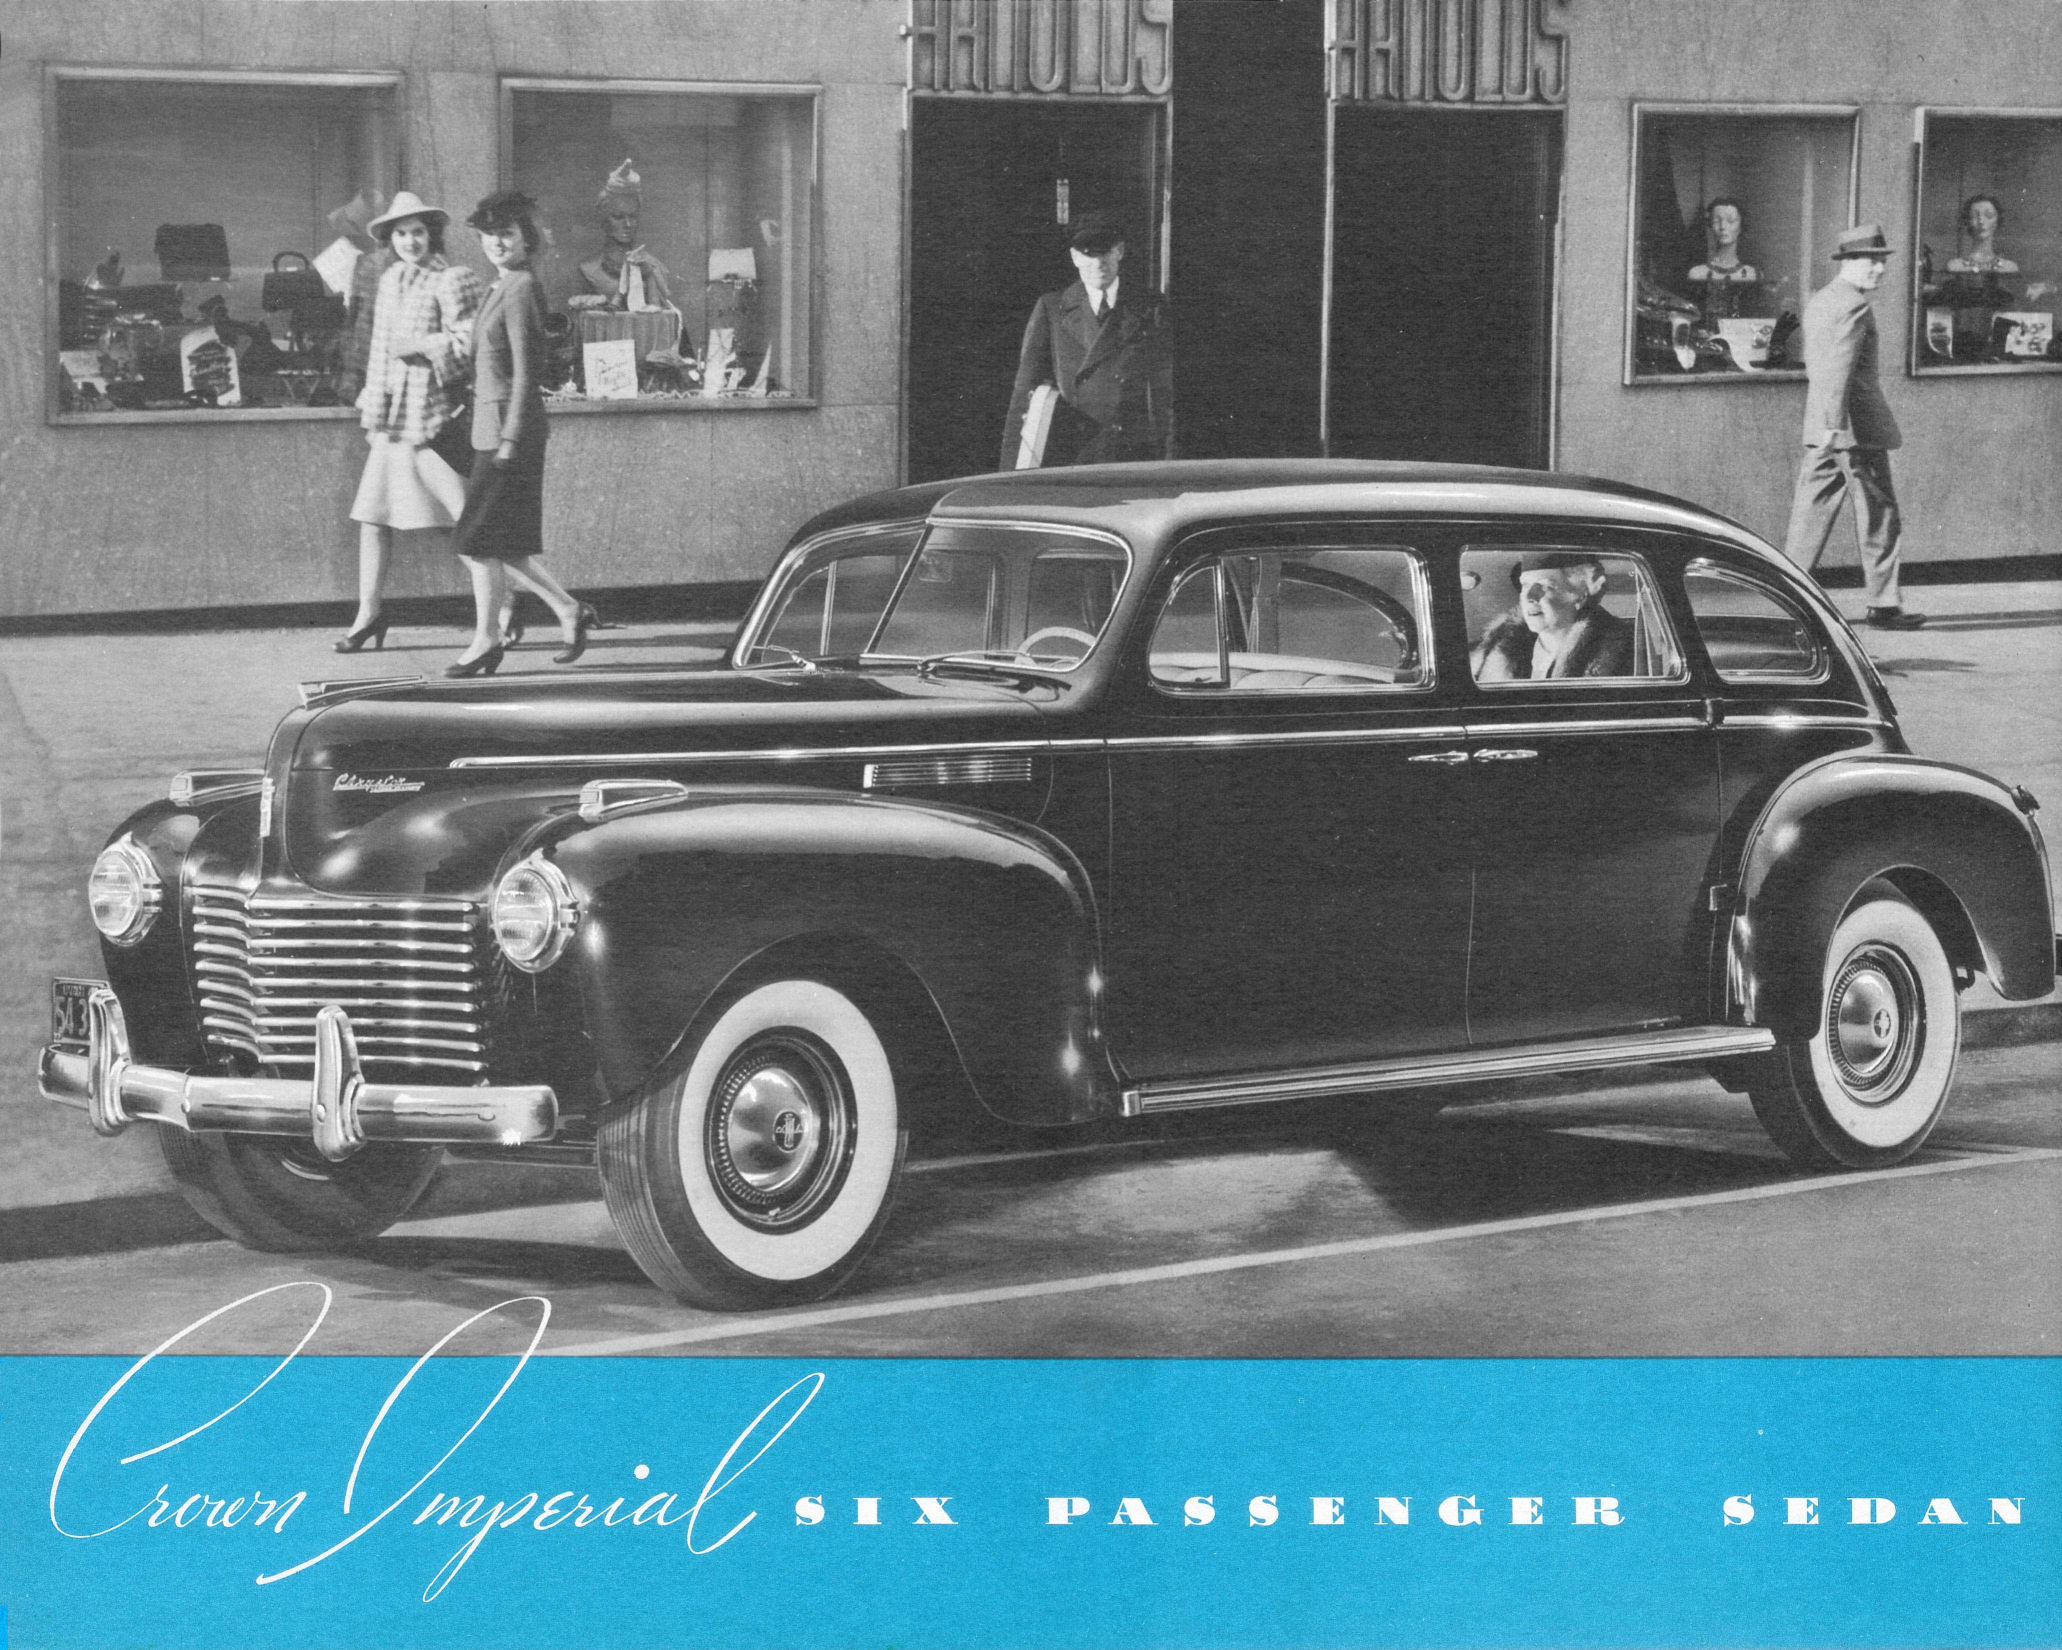 1940 Chrysler Crown Imperial-09